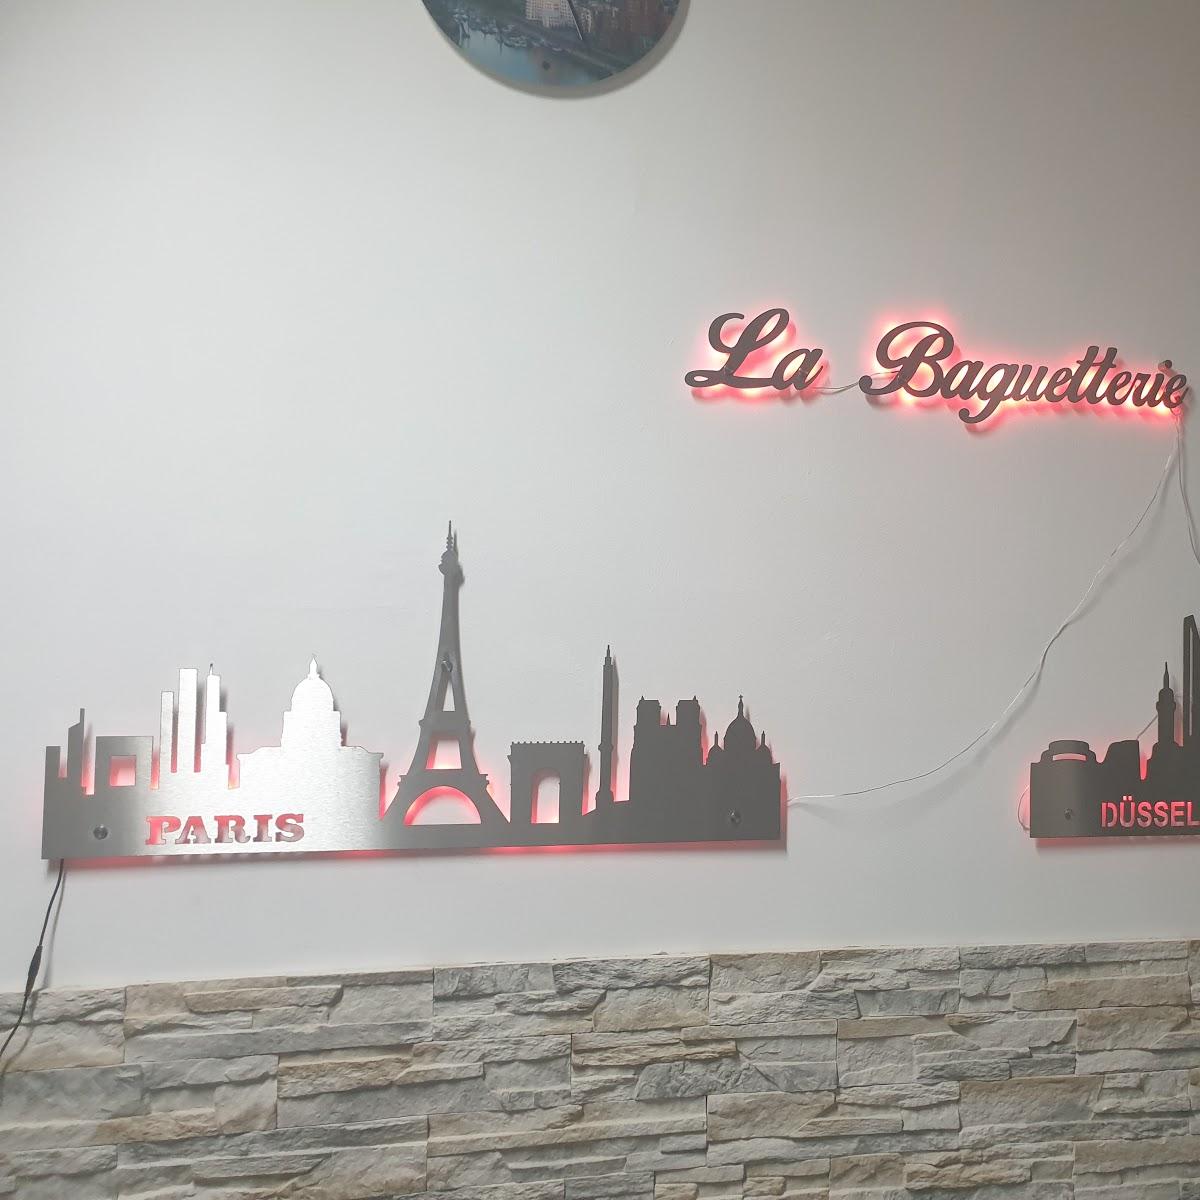 Restaurant "La Baguetterie" in Düsseldorf